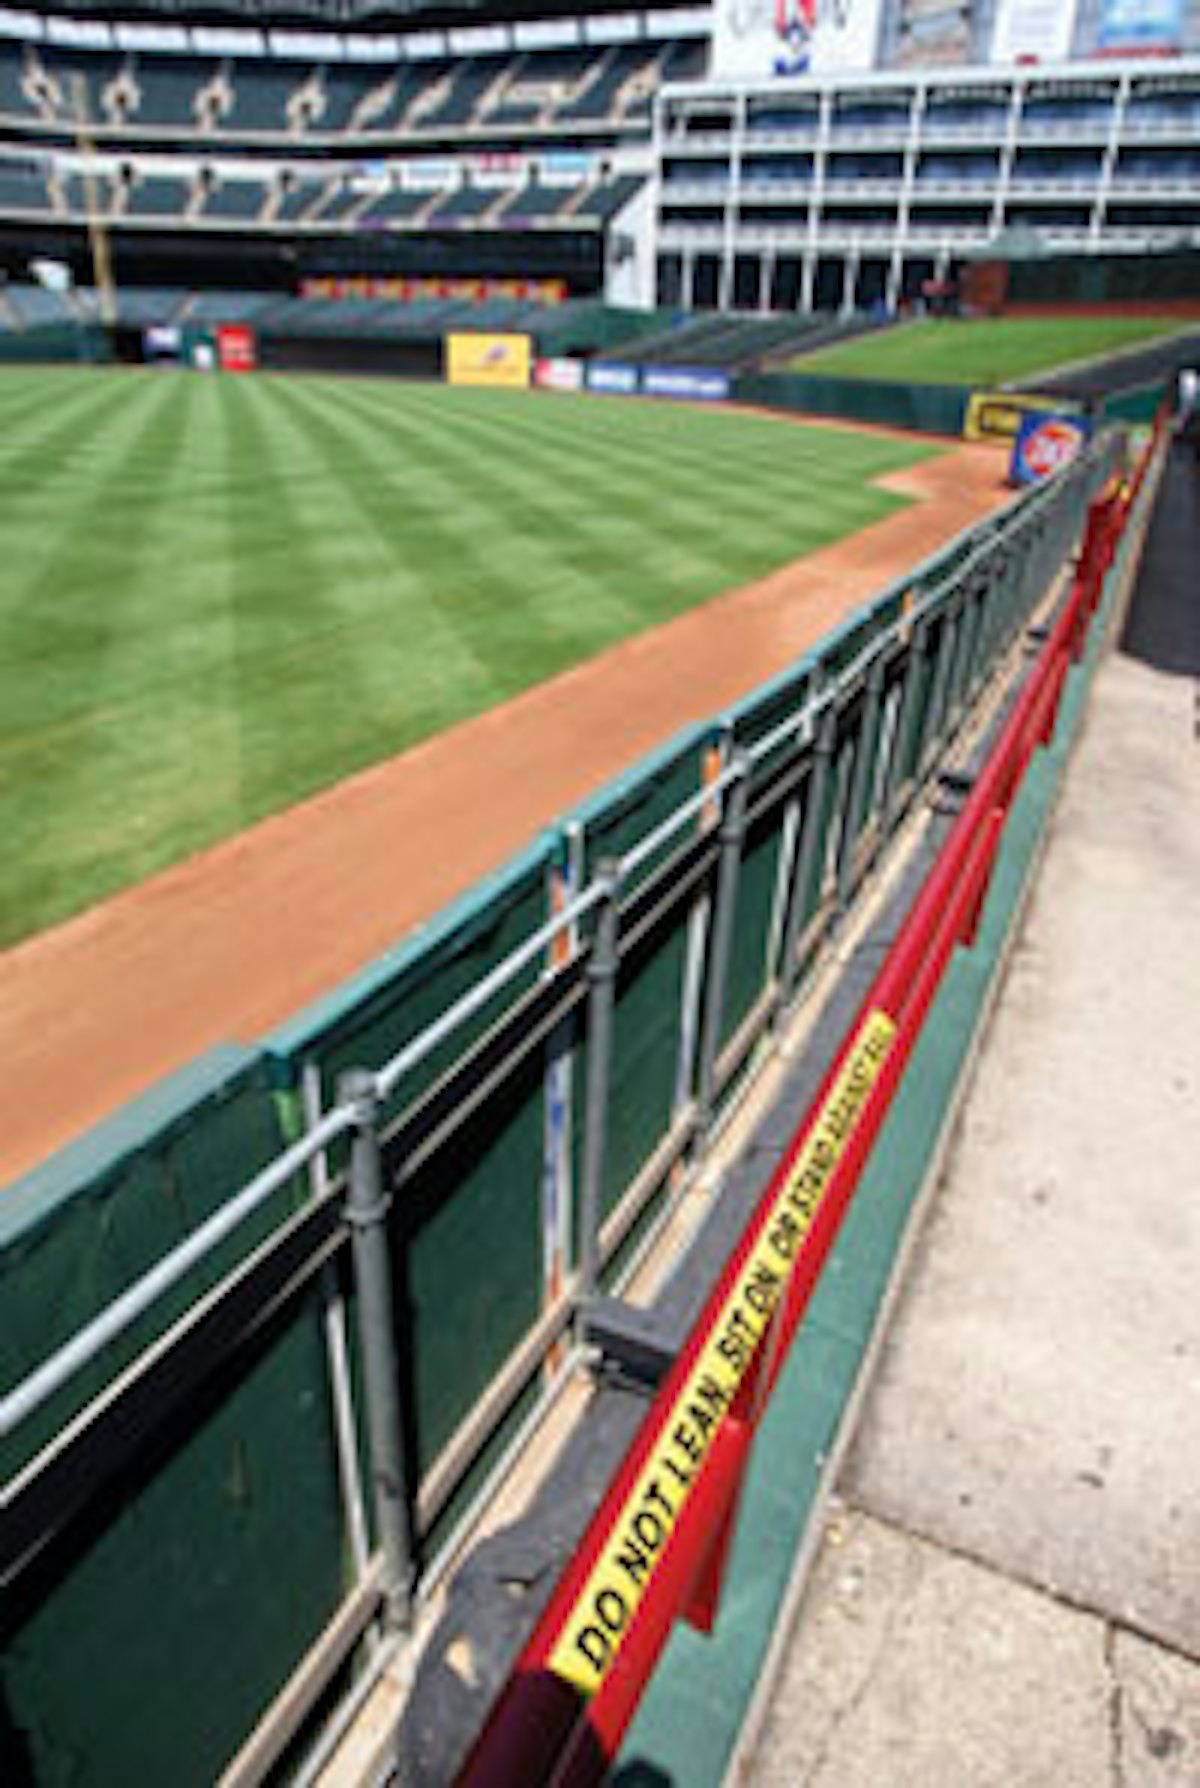 Ballpark in Arlington architect reflects on stadium built to last